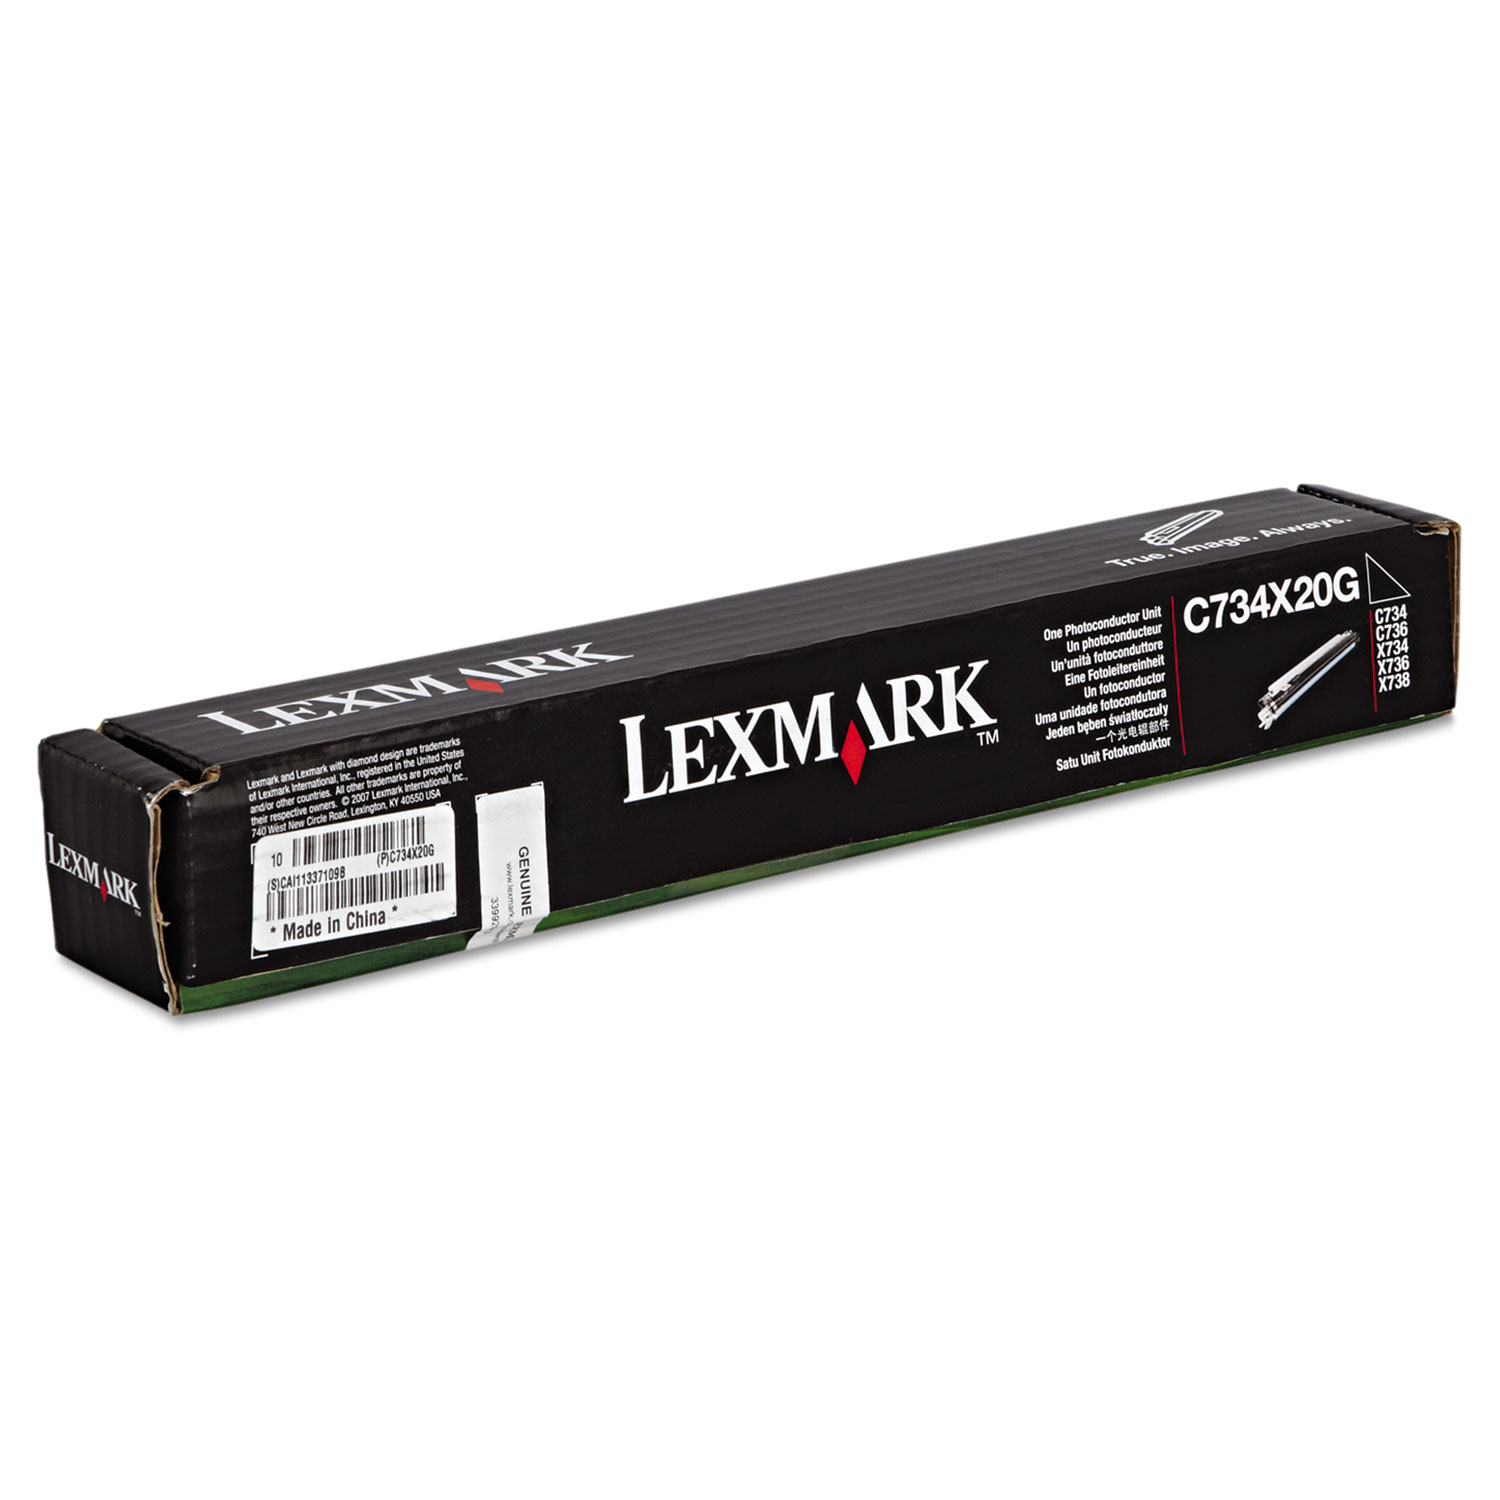  Lexmark C734X20G C734X20G Photoconductor Kit, 20000 Page-Yield, Black (LEXC734X20G) 